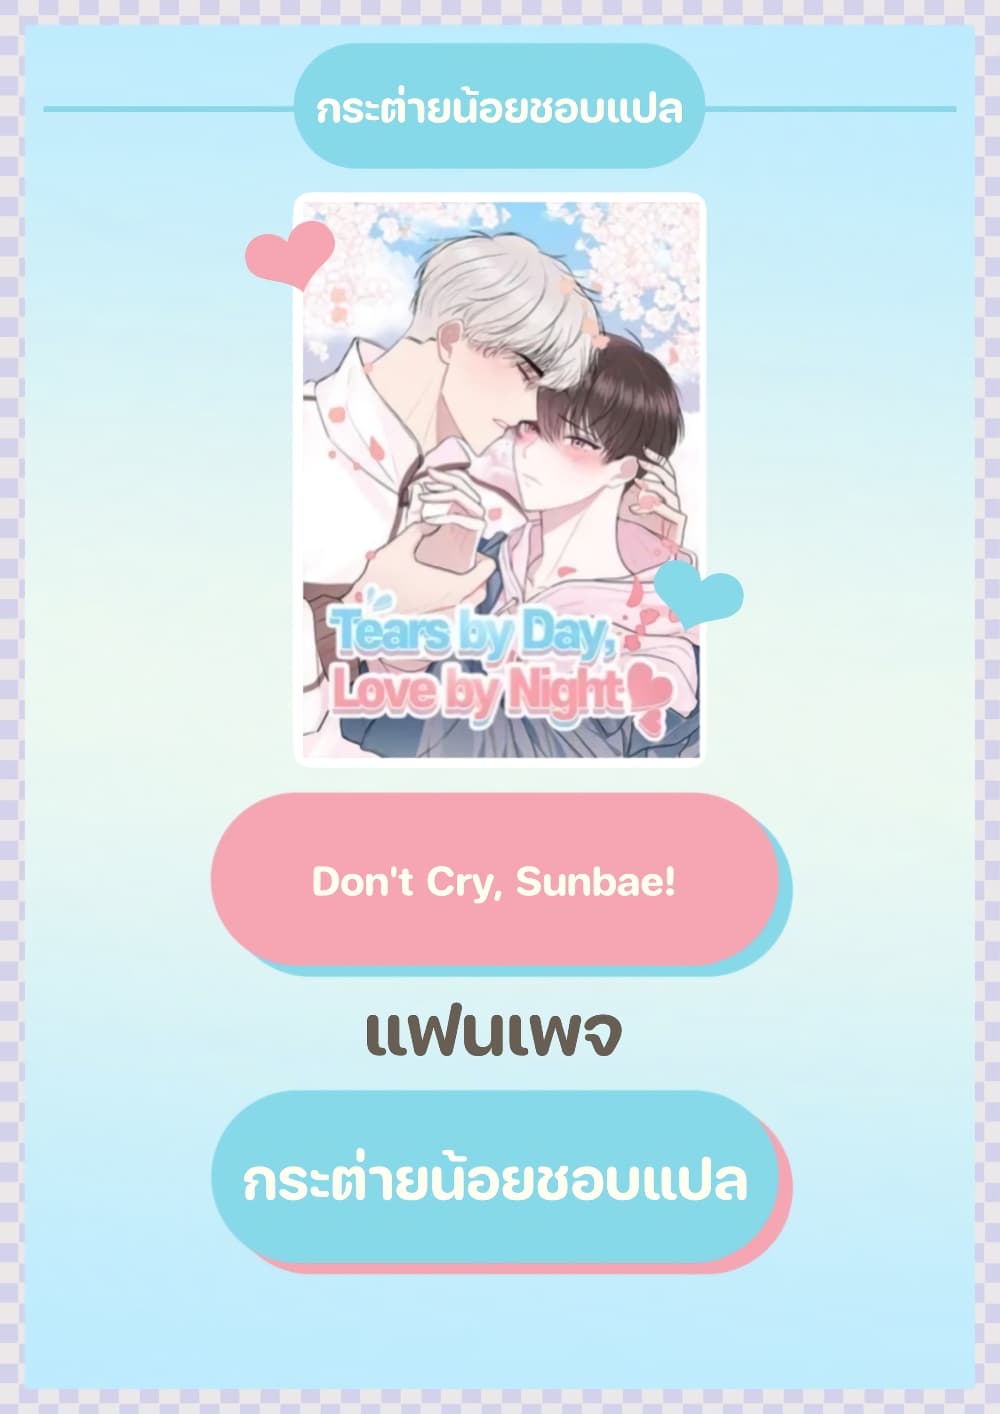 Donโ€t Cry, Sunbae! 9 (44)